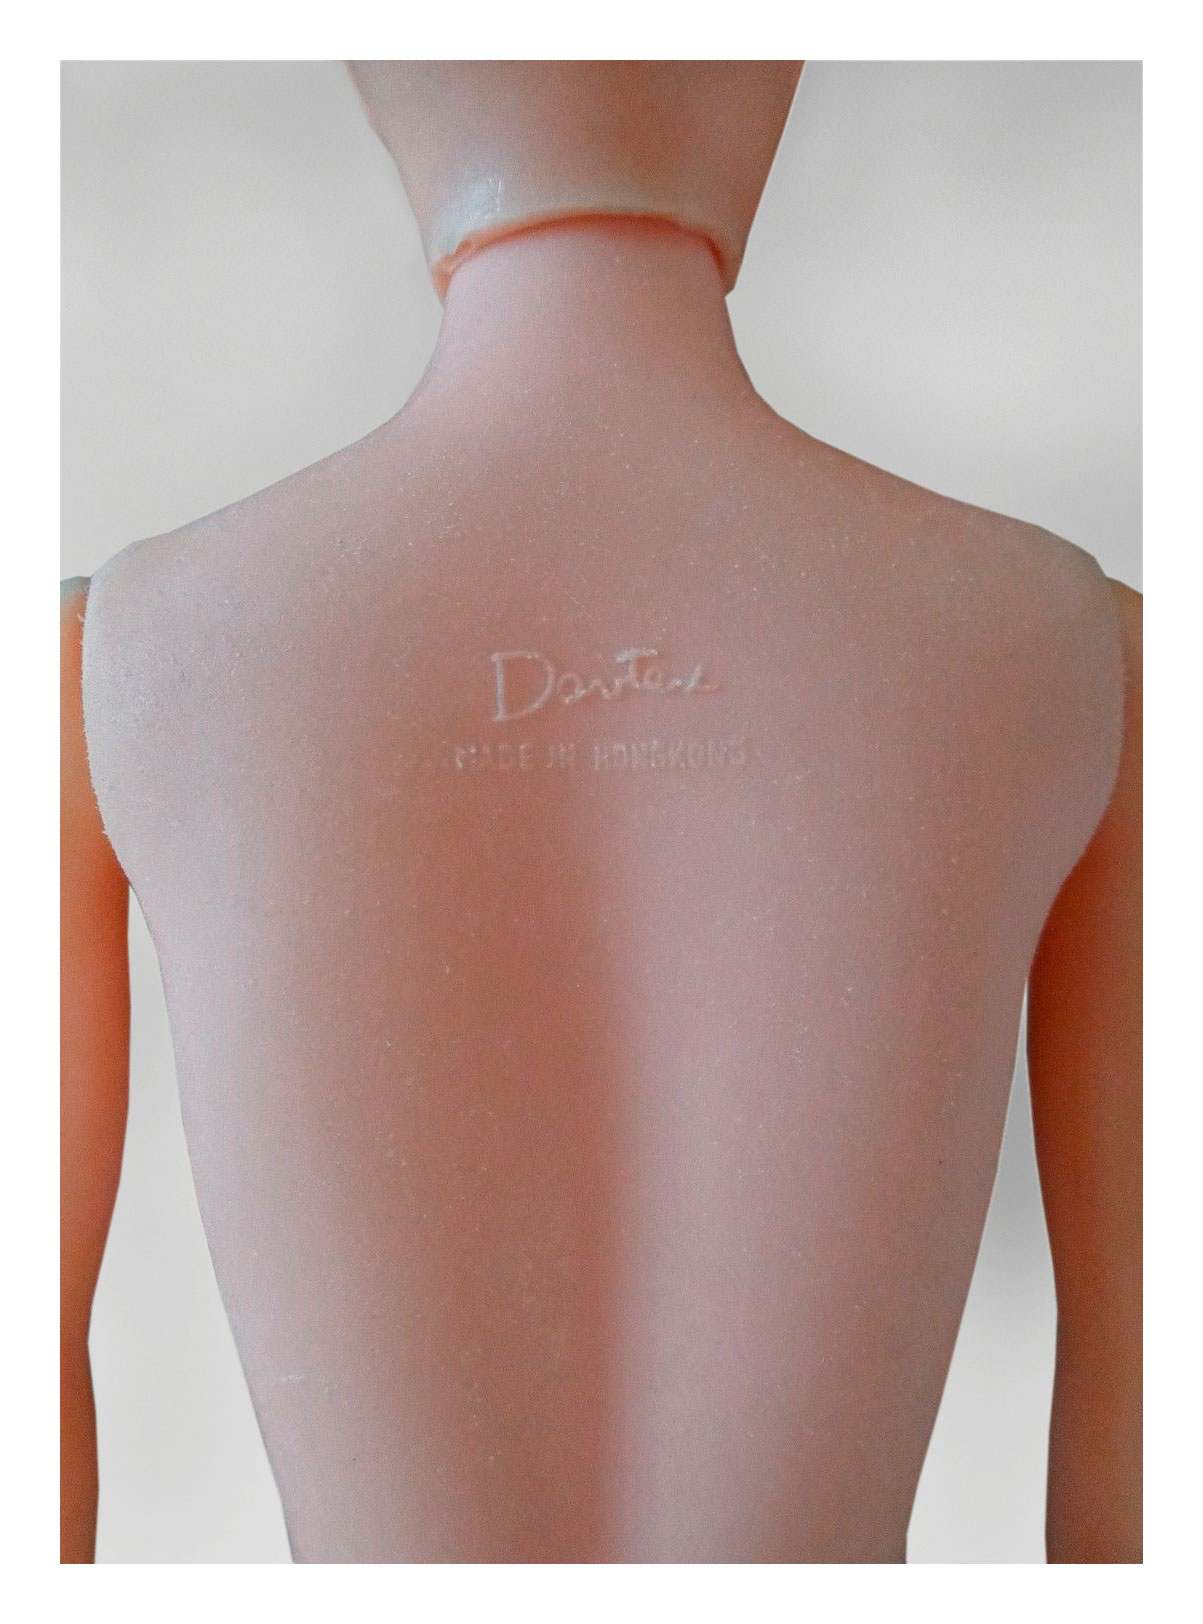 Davtex Doll markings